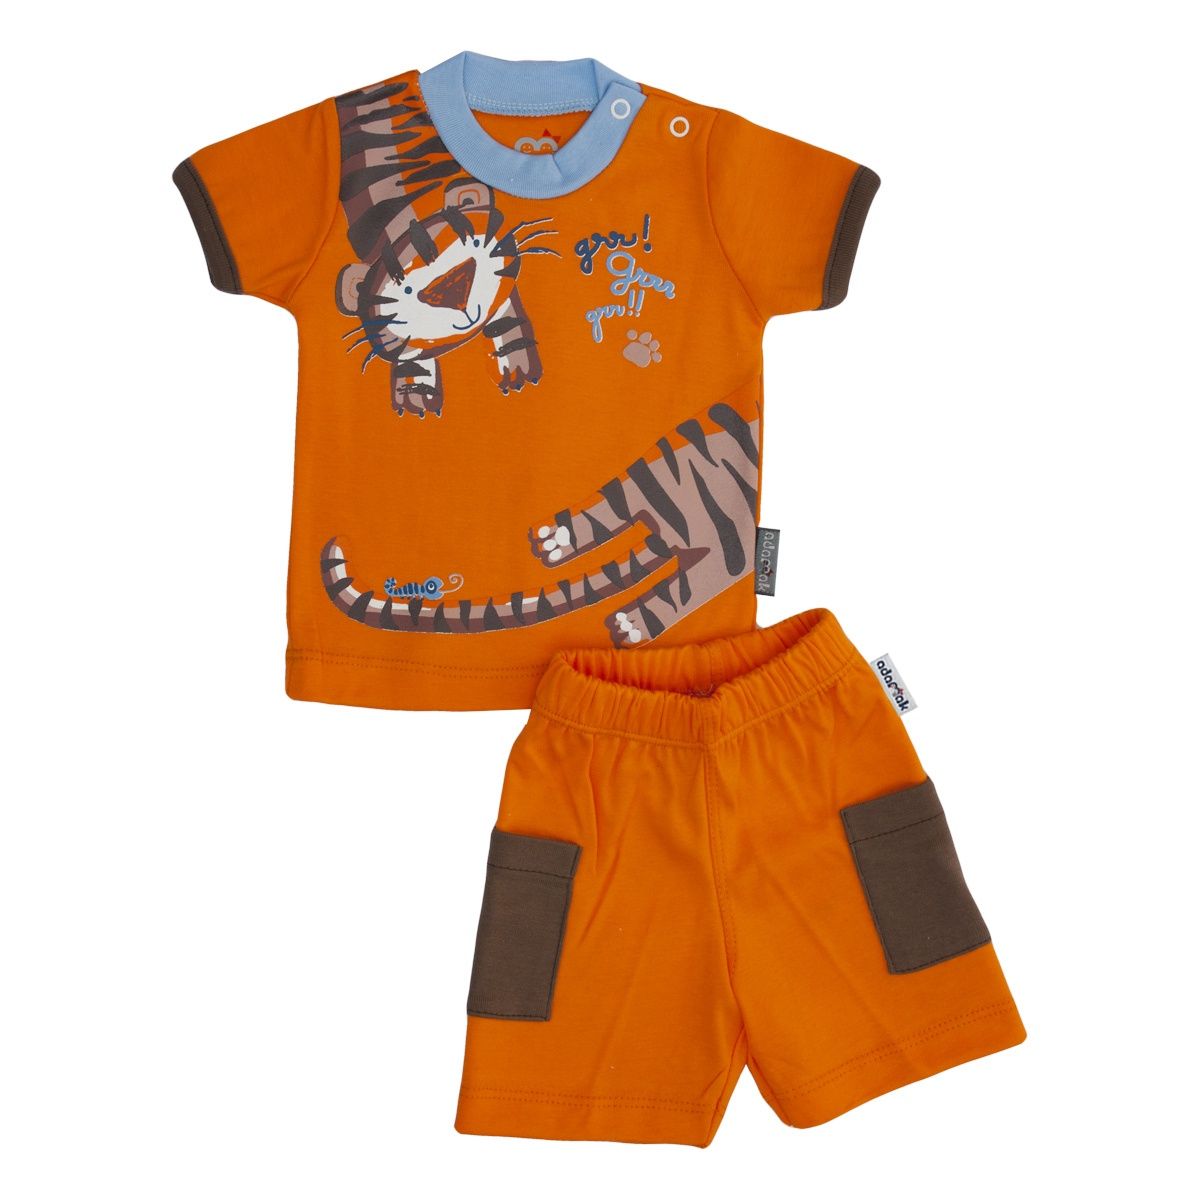 ست 2 تکه لباس نوزادی پسرانه آدمک کد 1668011 رنگ نارنجی -  - 1